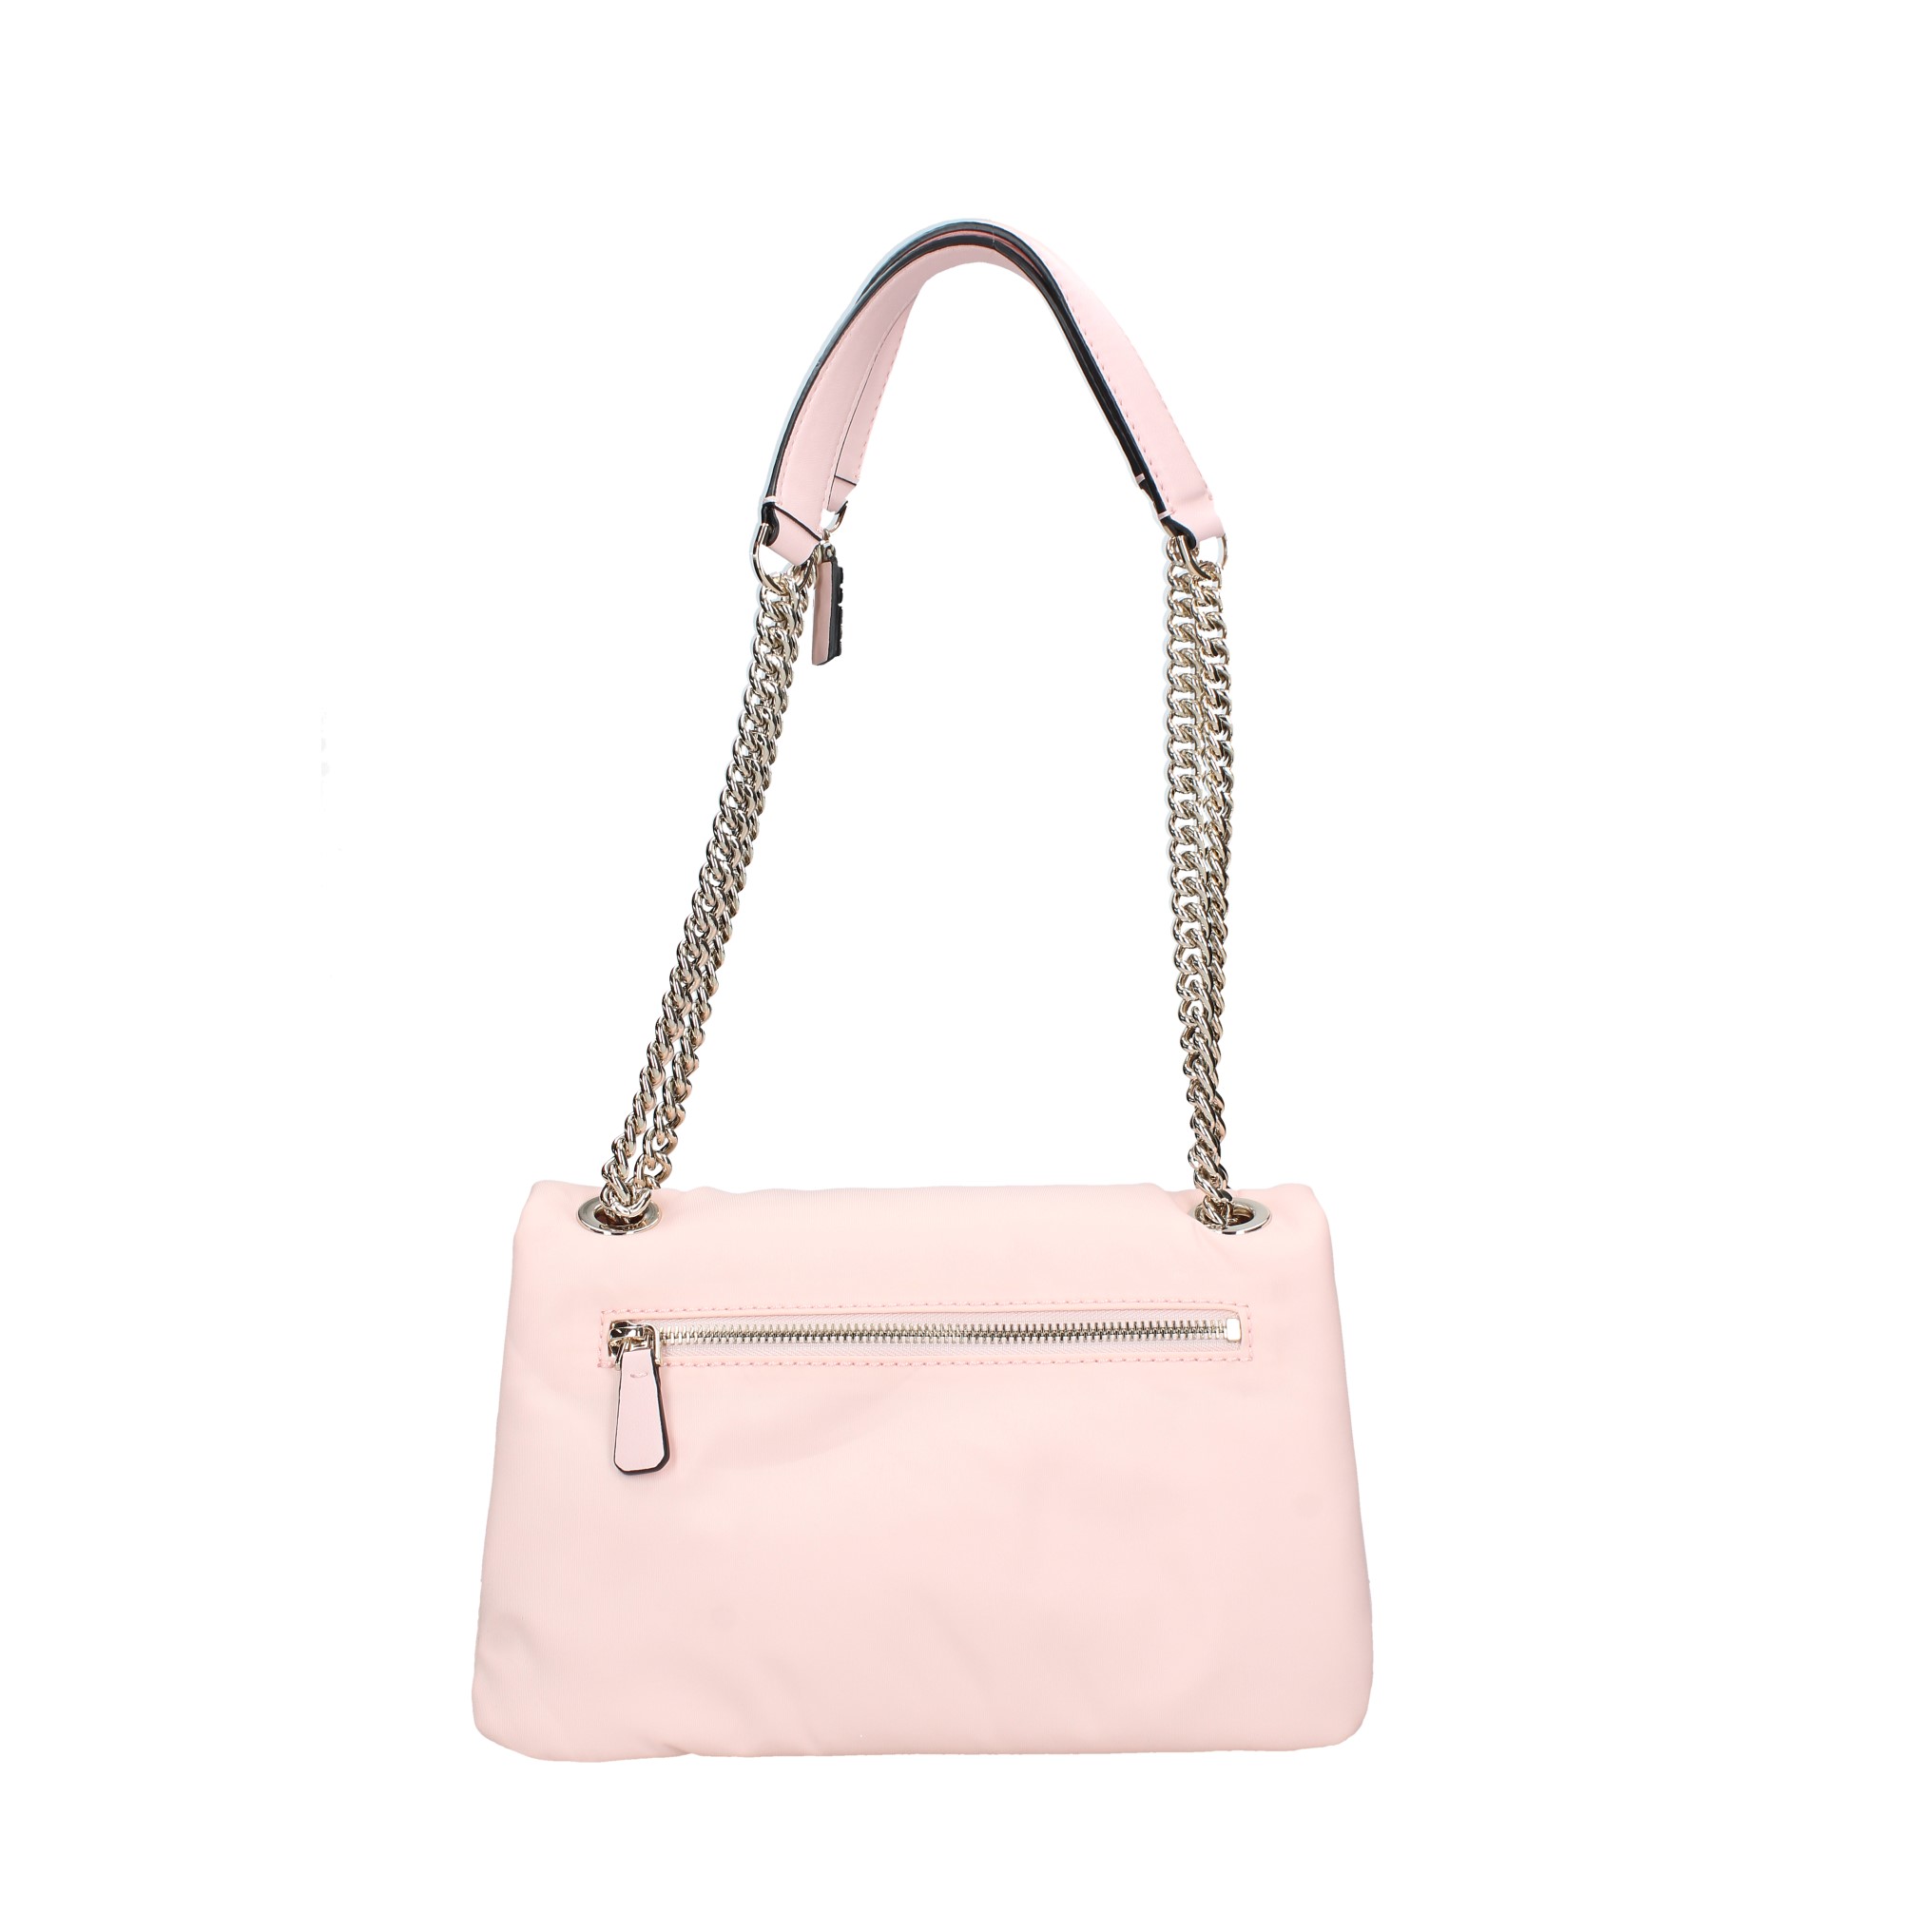 Shoulder bags Pink - GUESS - Ginevra calzature